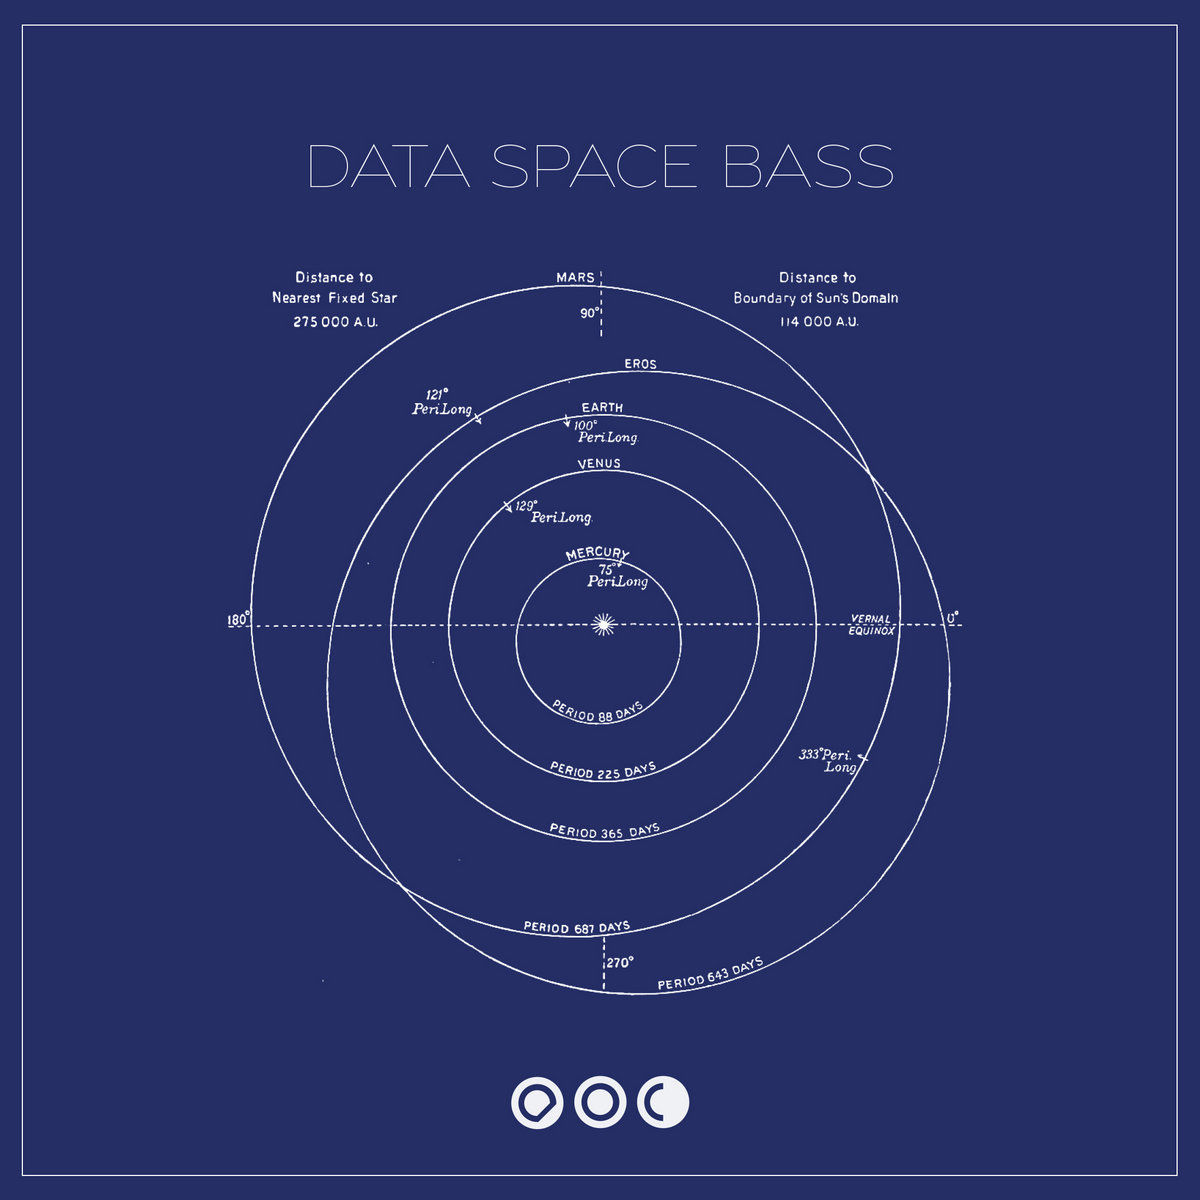 Cosmic bass. Space Bass. Data Space. Космический басс музыка.